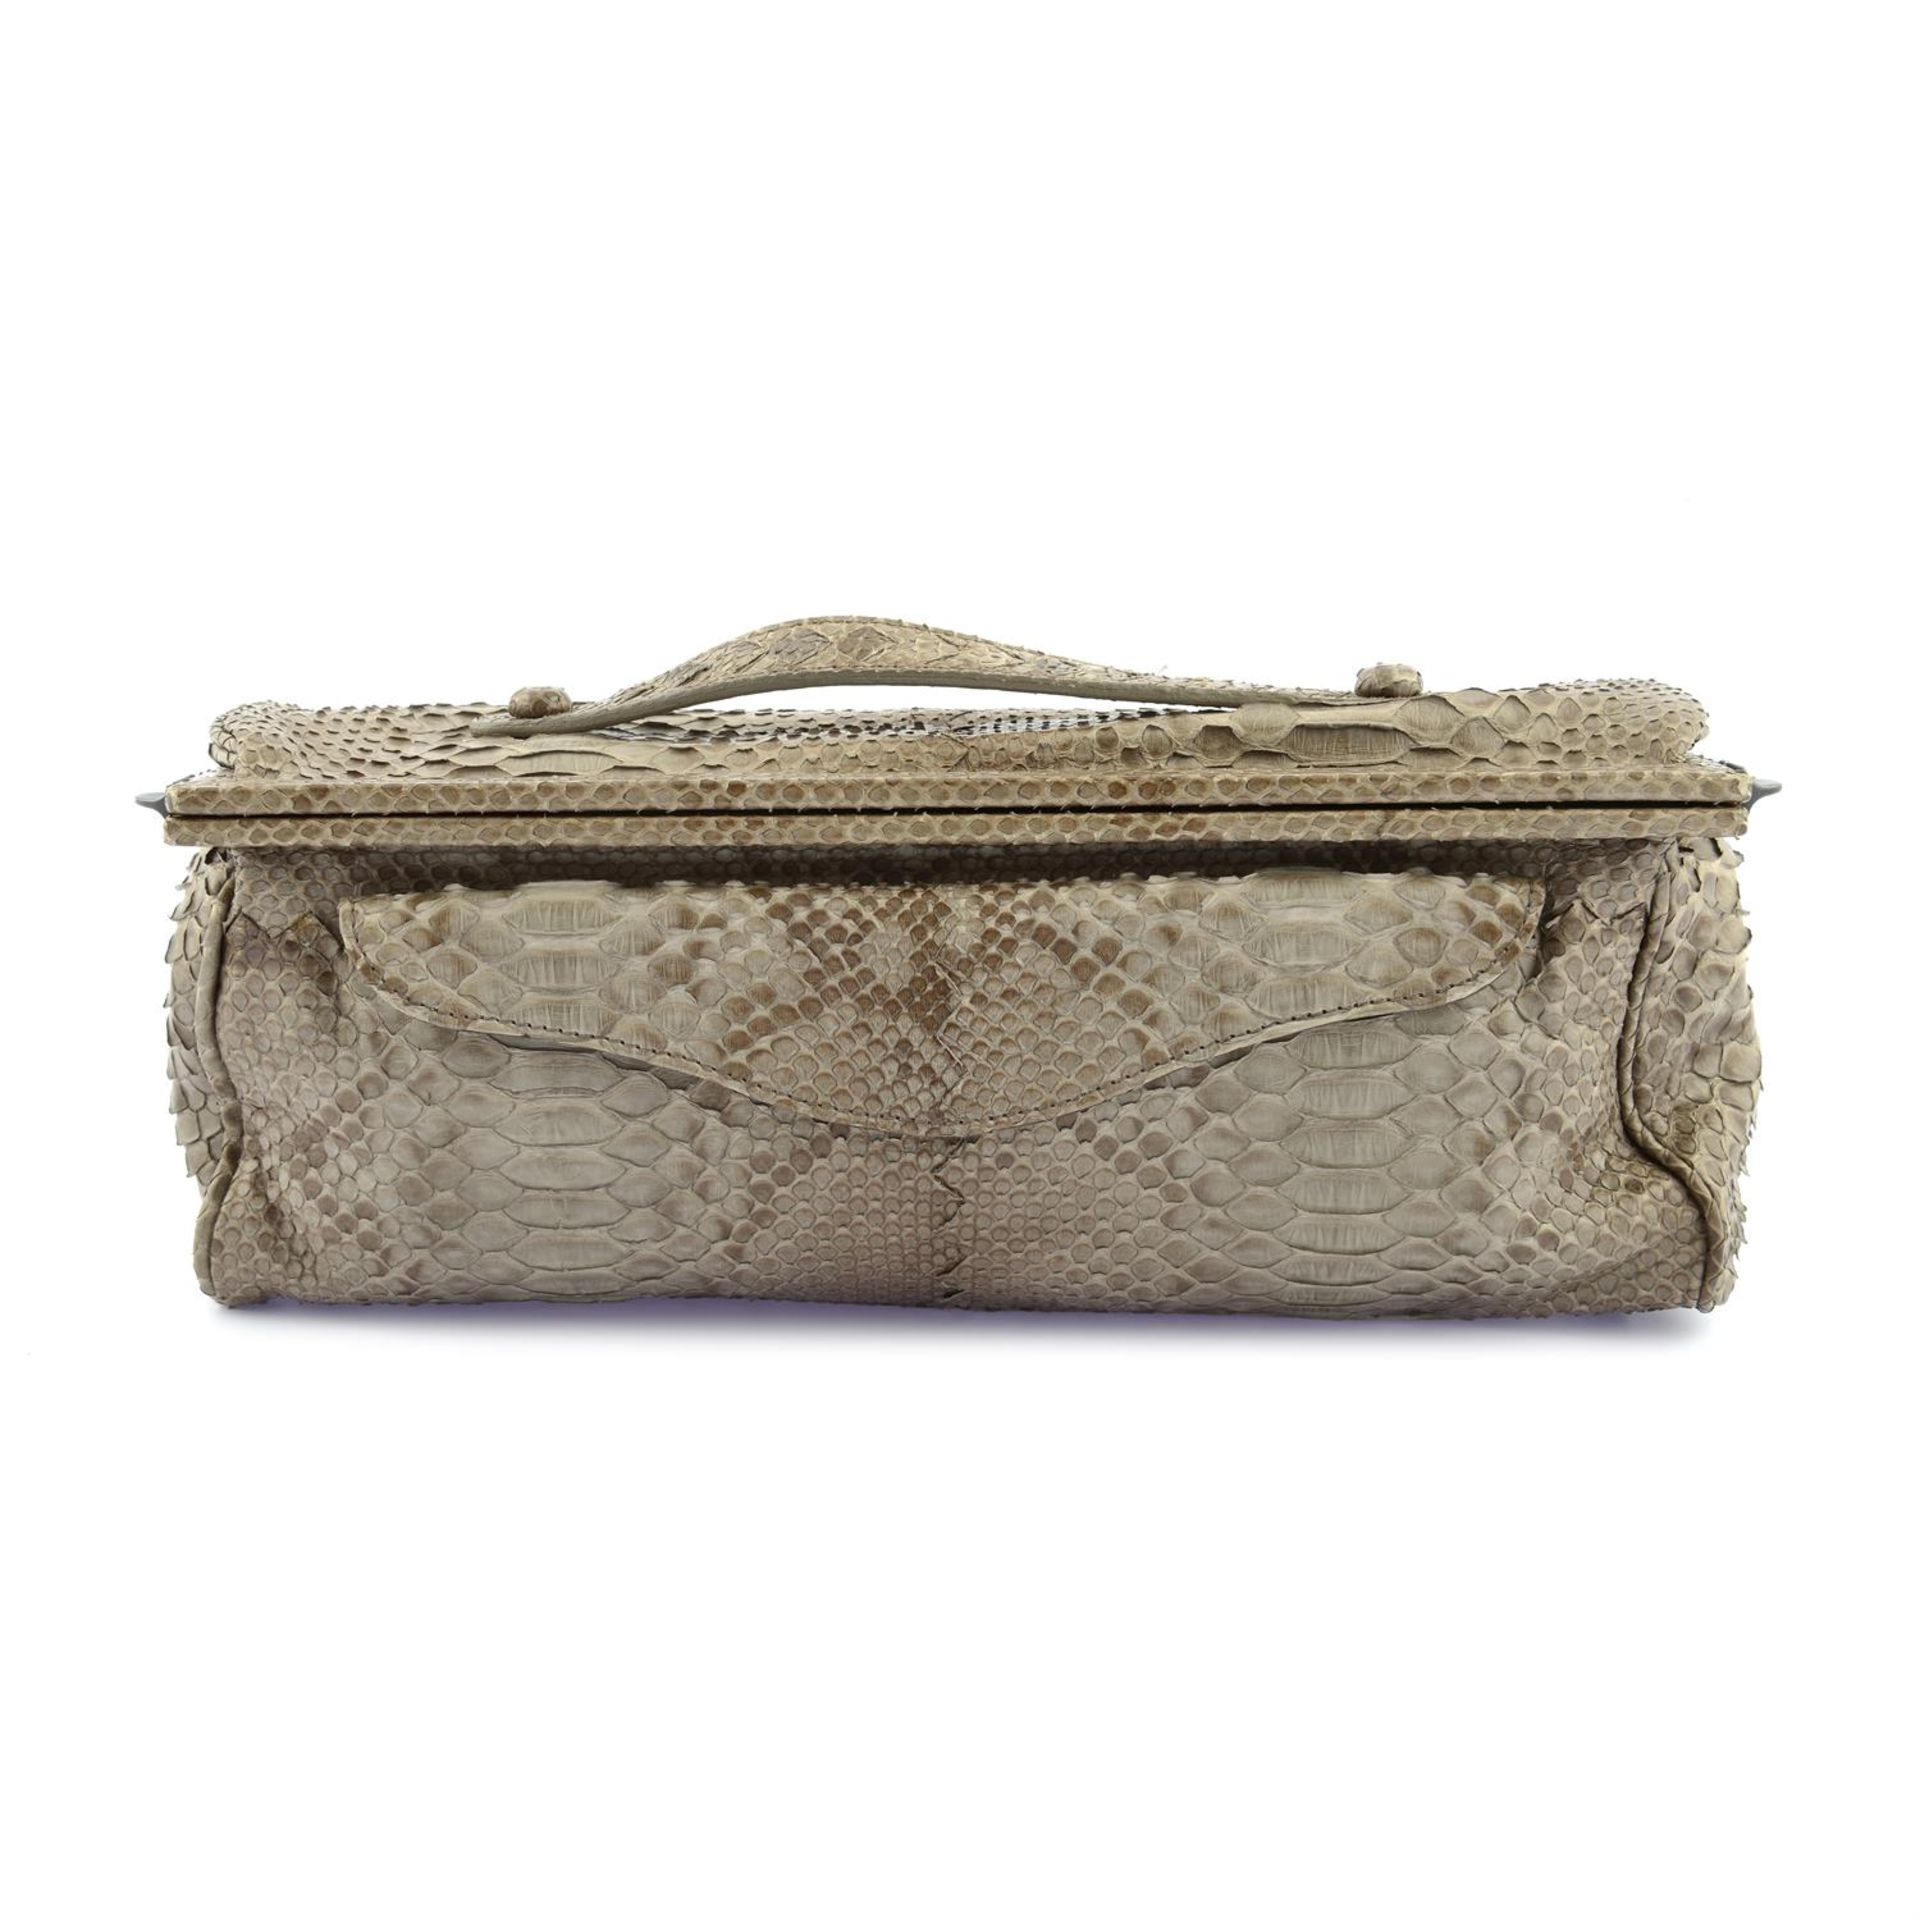 BOTTEGA VENETA - a brown Python leather clutch bag.